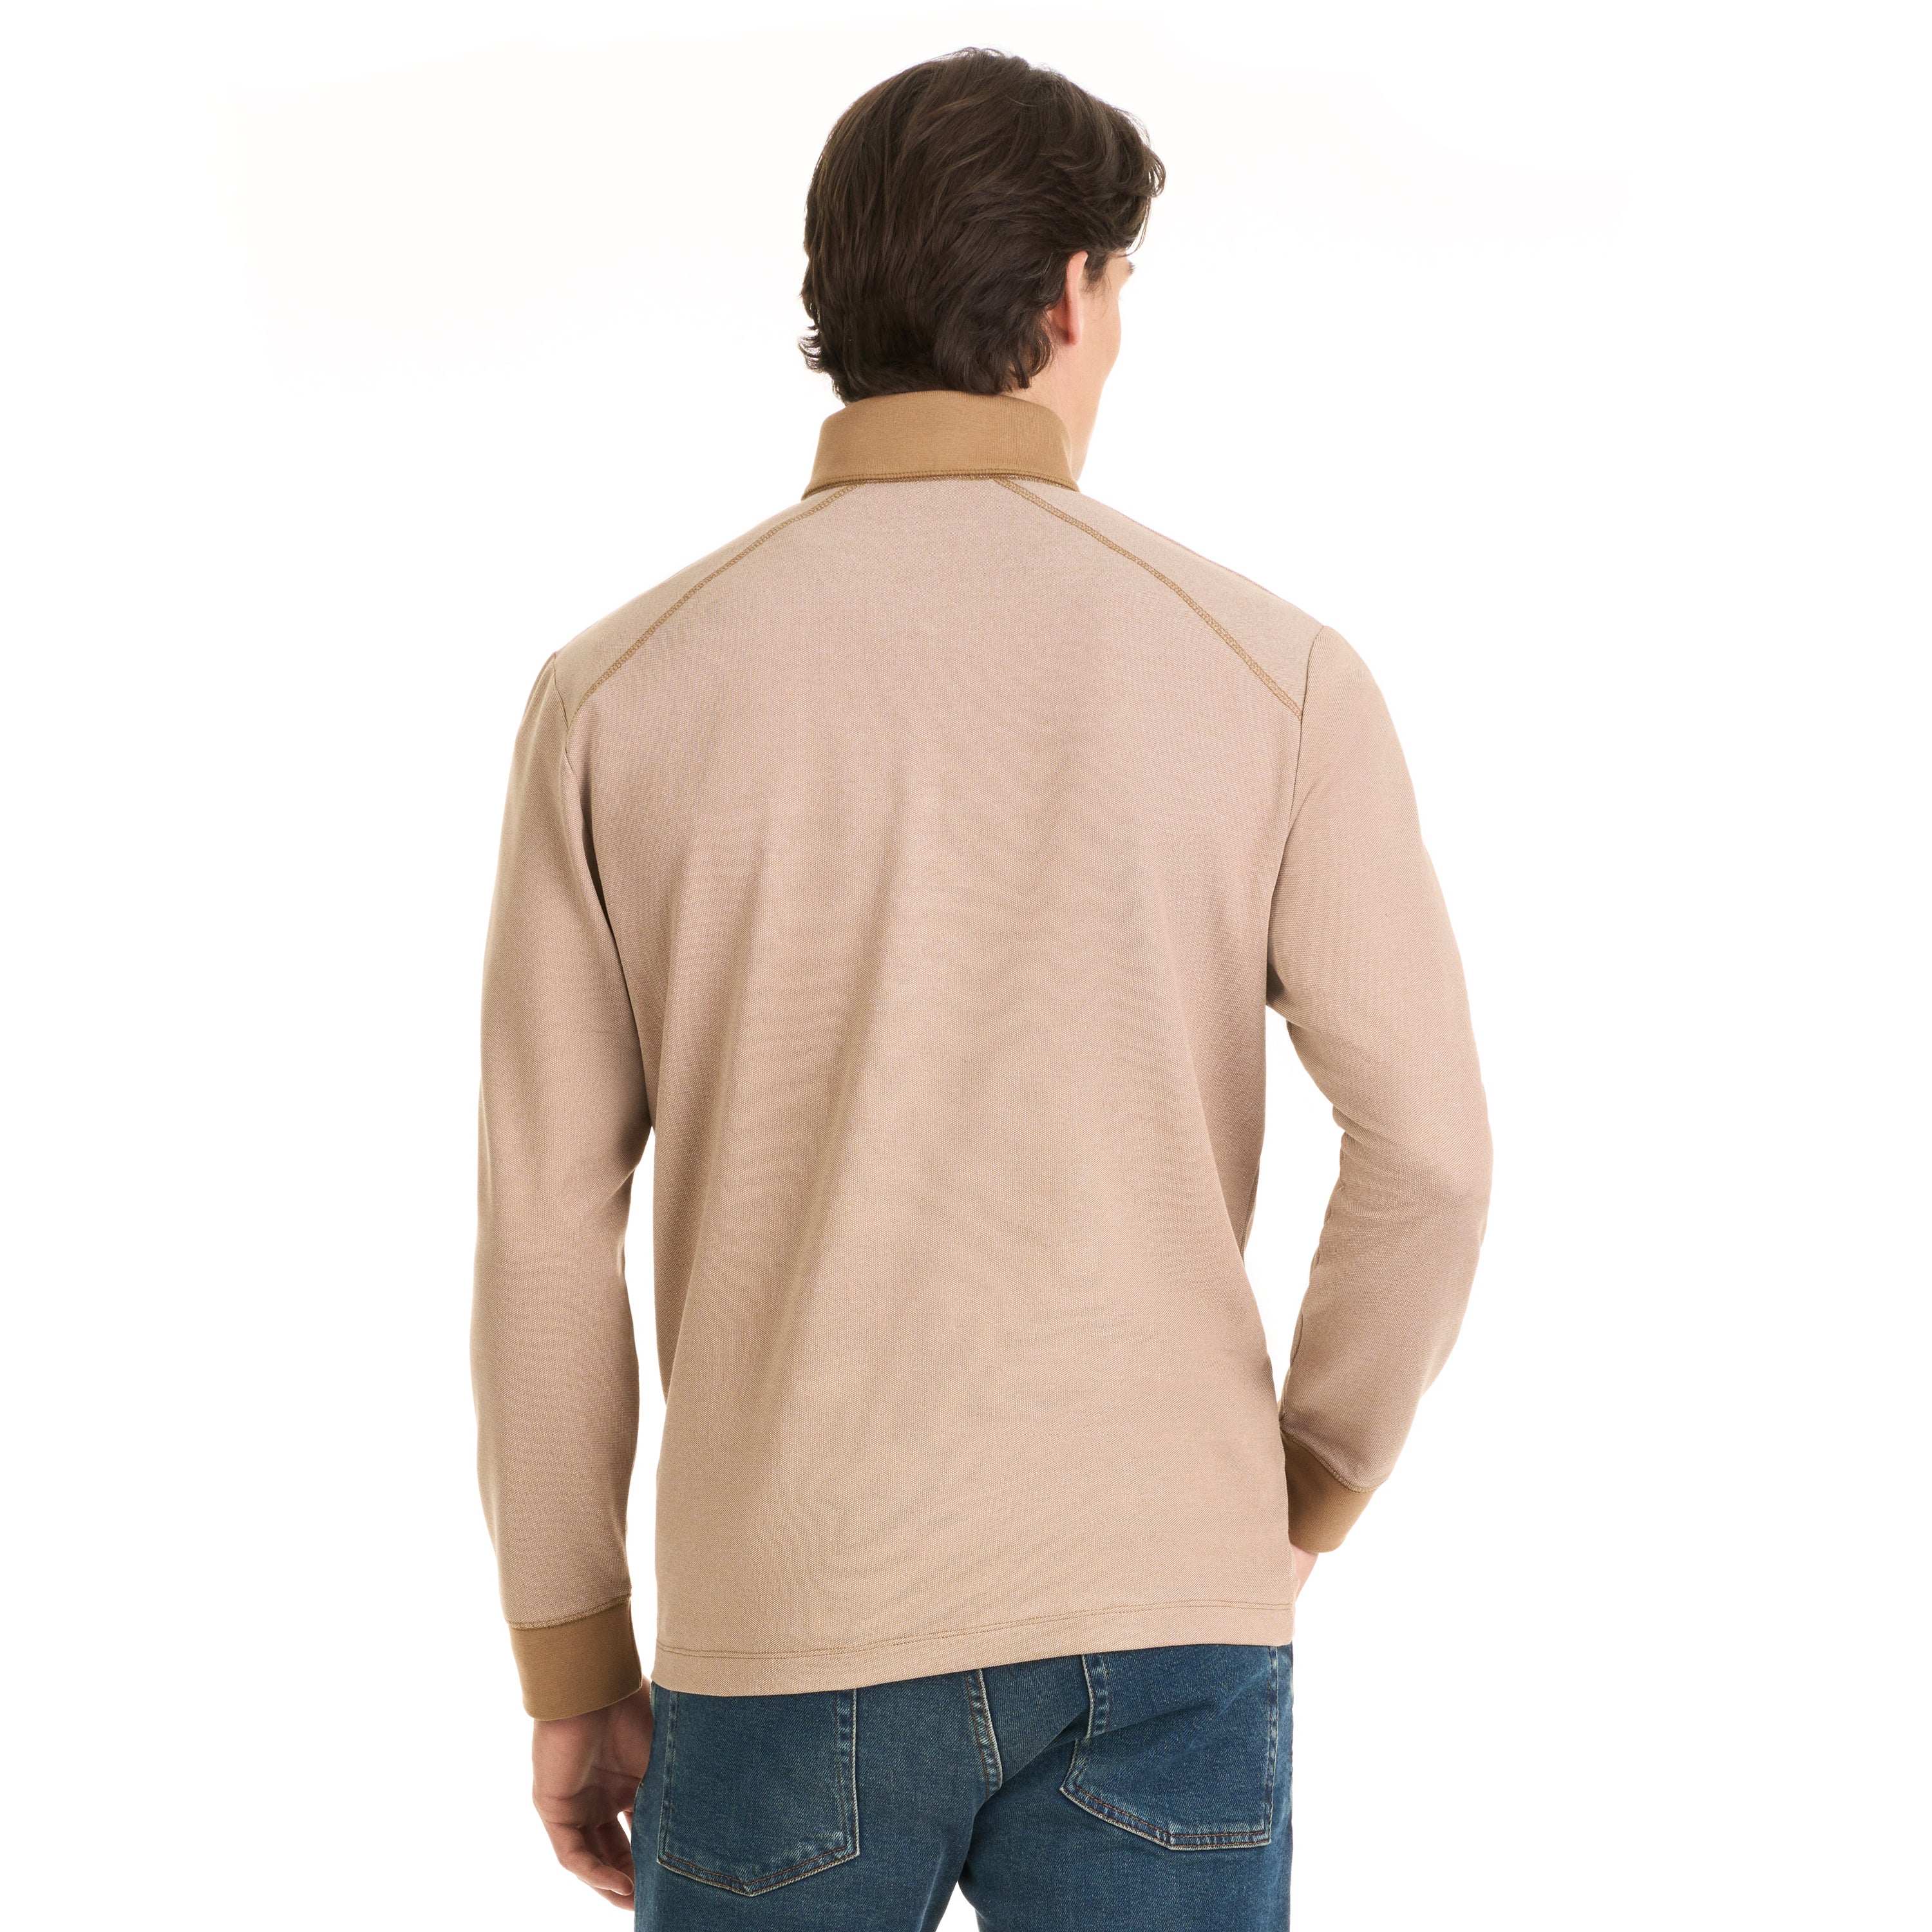 Essential Stain Shield Pique Quarter Zip Pullover – Regular Fit